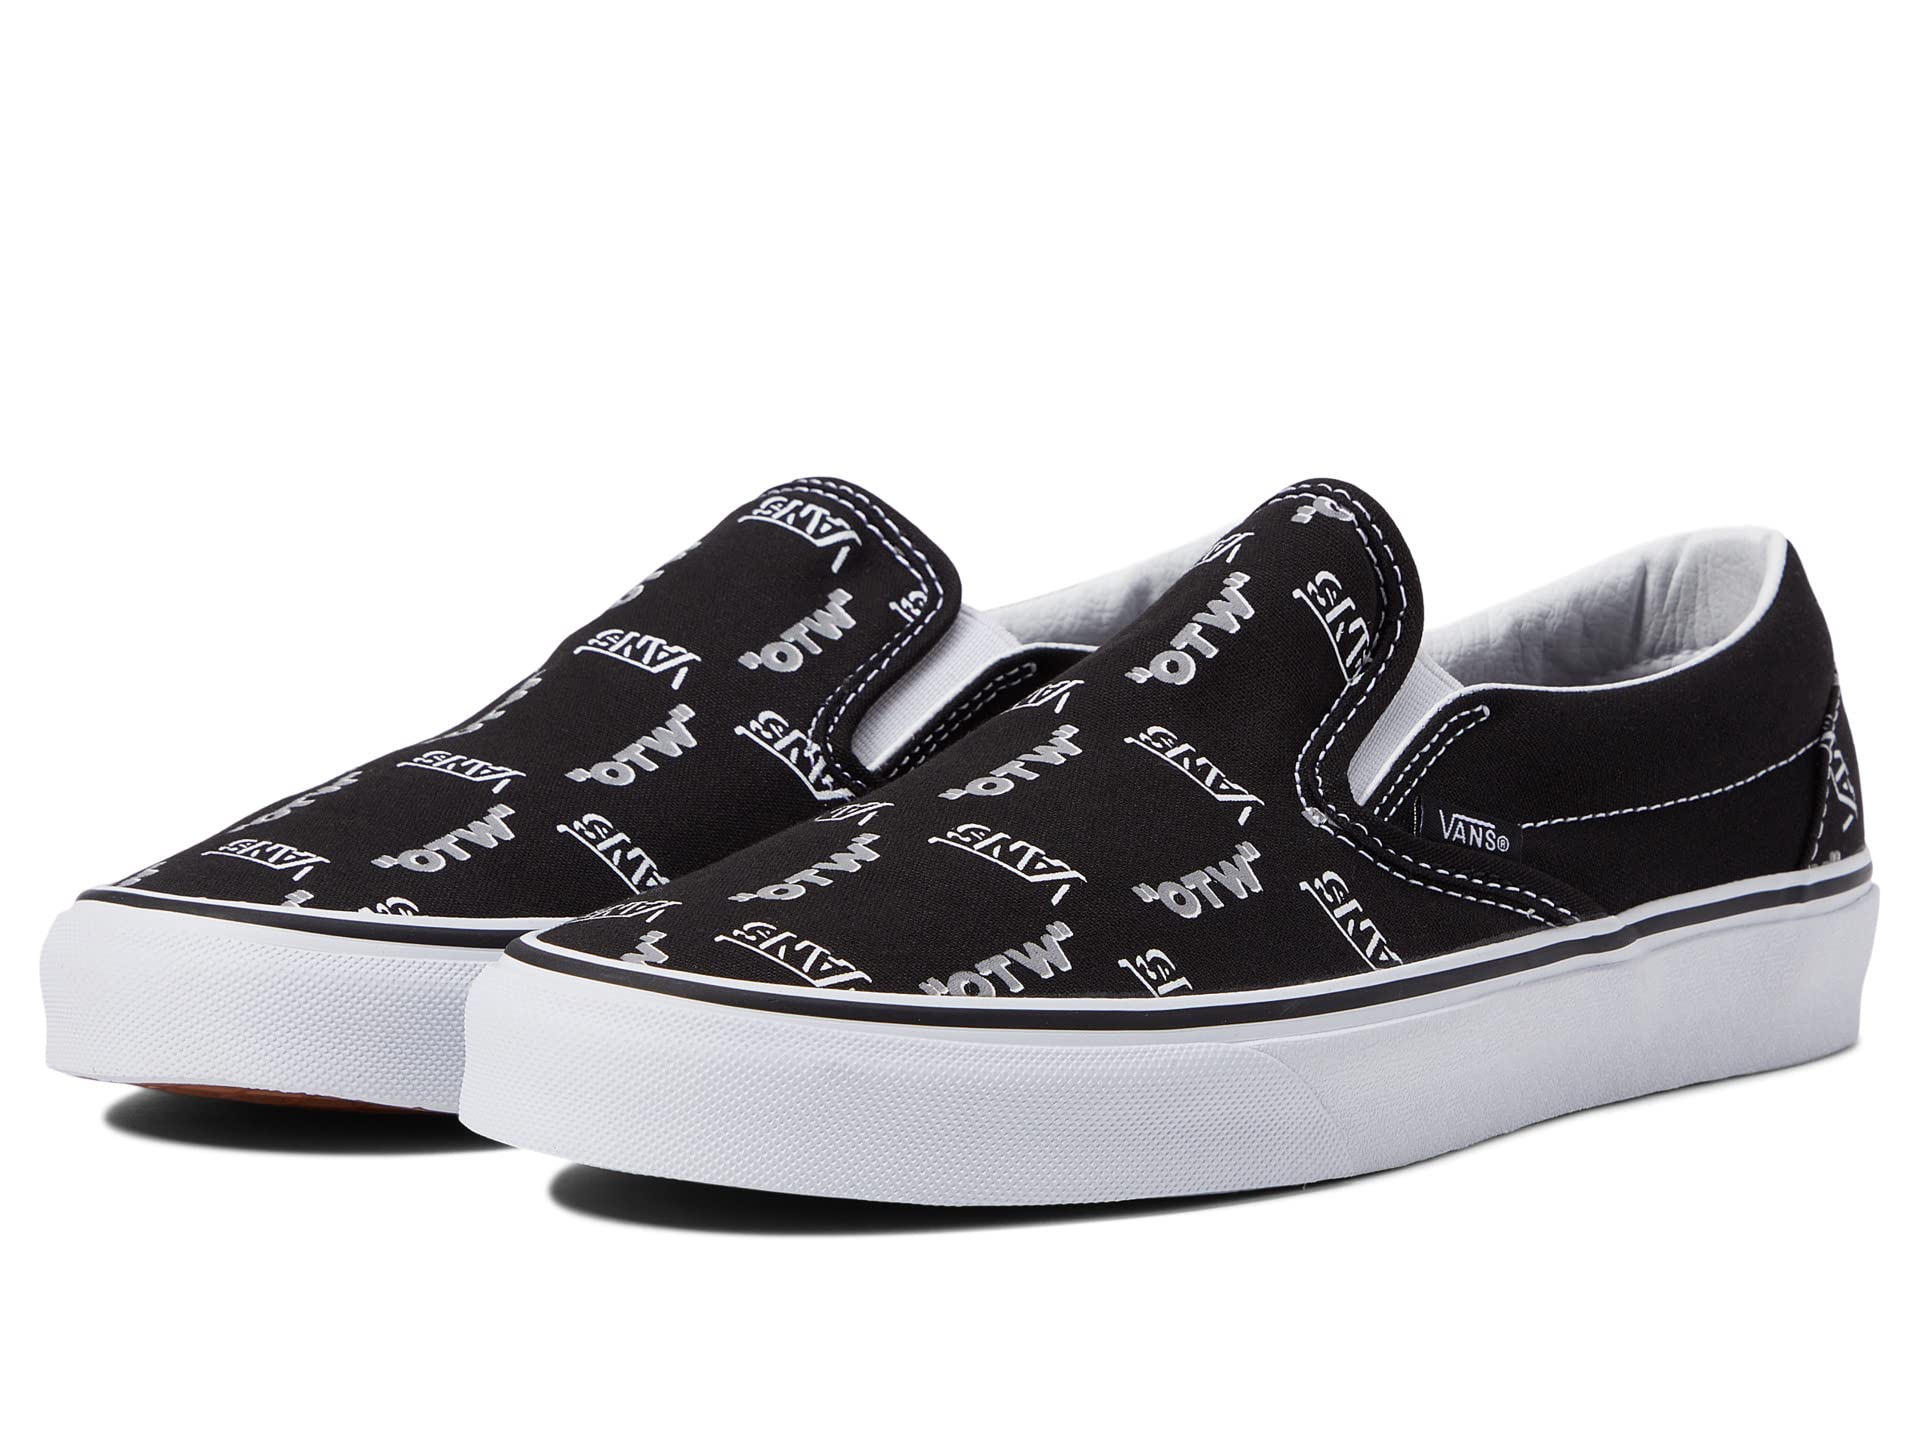 Кеды Vans, Classic Slip-On классическая обувь без шнуровки vans цвет black and white checker white